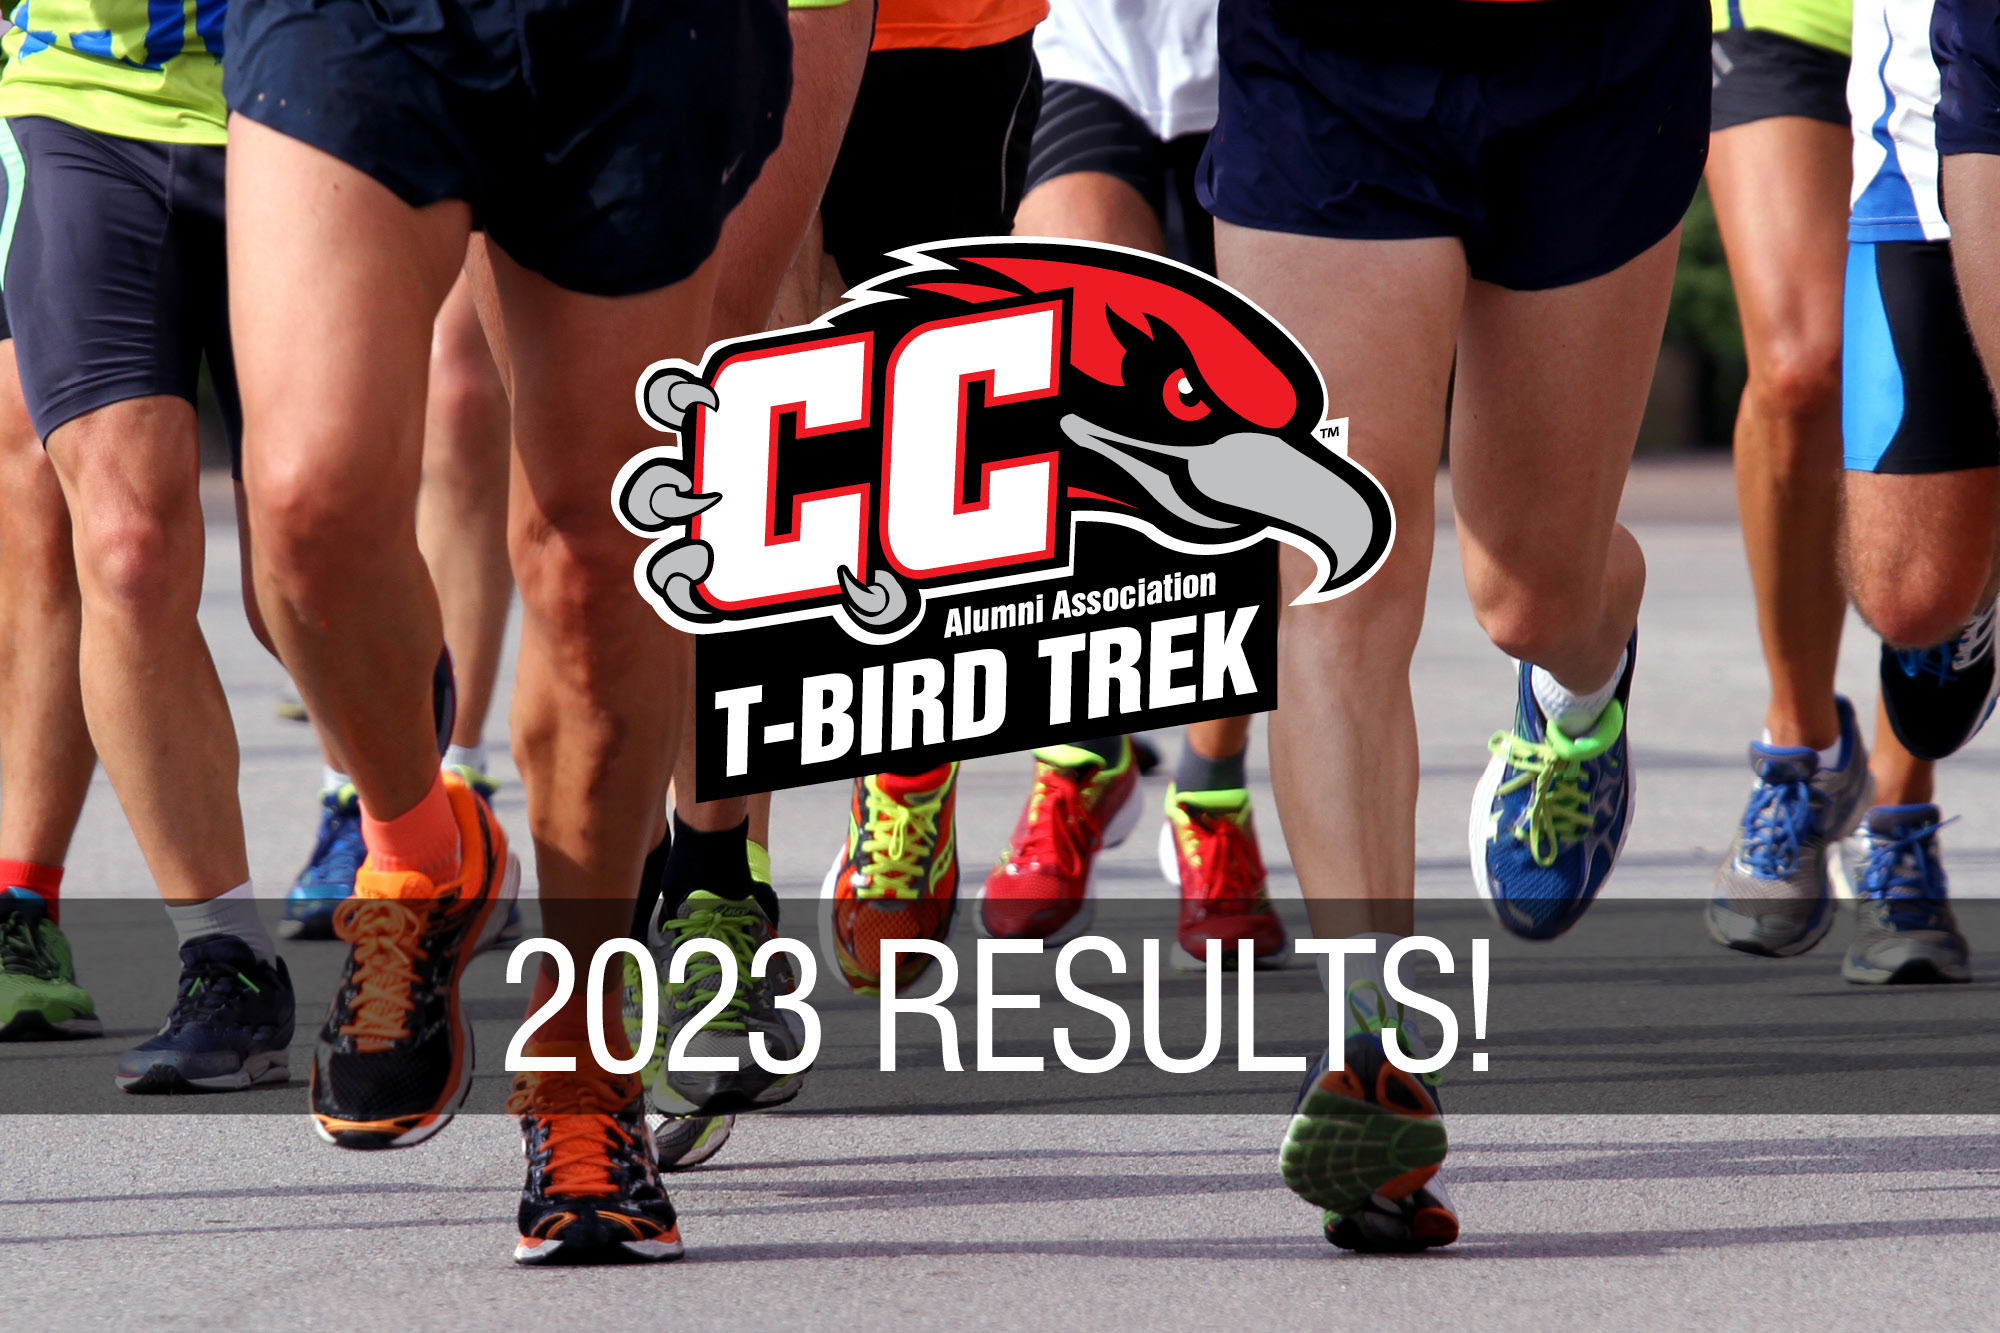 Image for T-Bird Trek Results press release.